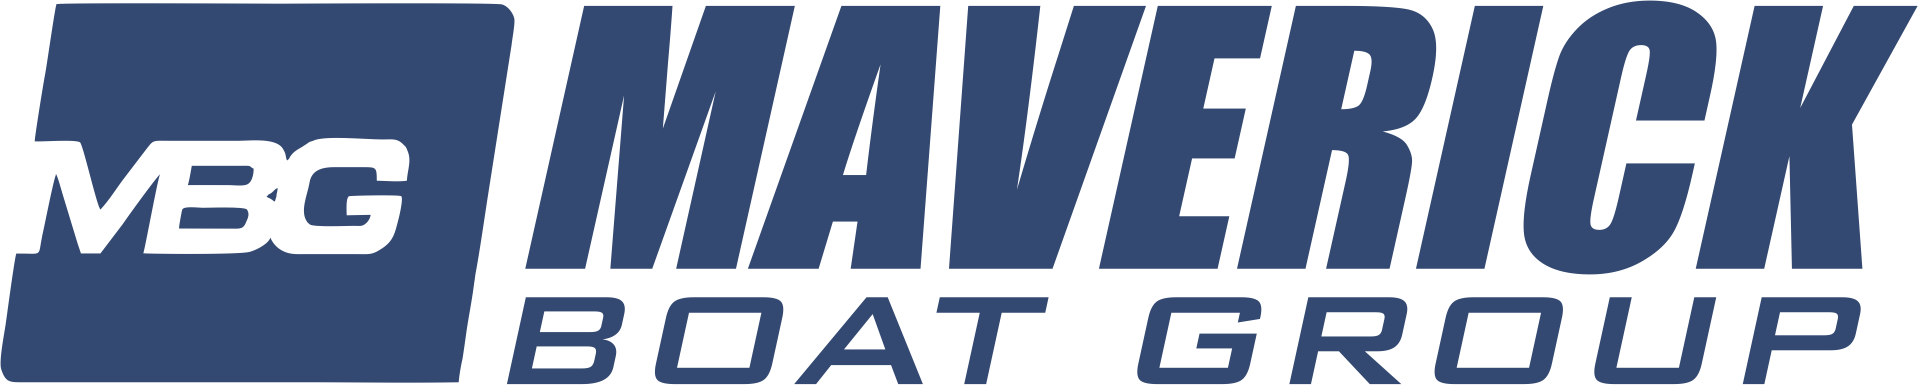 Maverick Boat Group logo